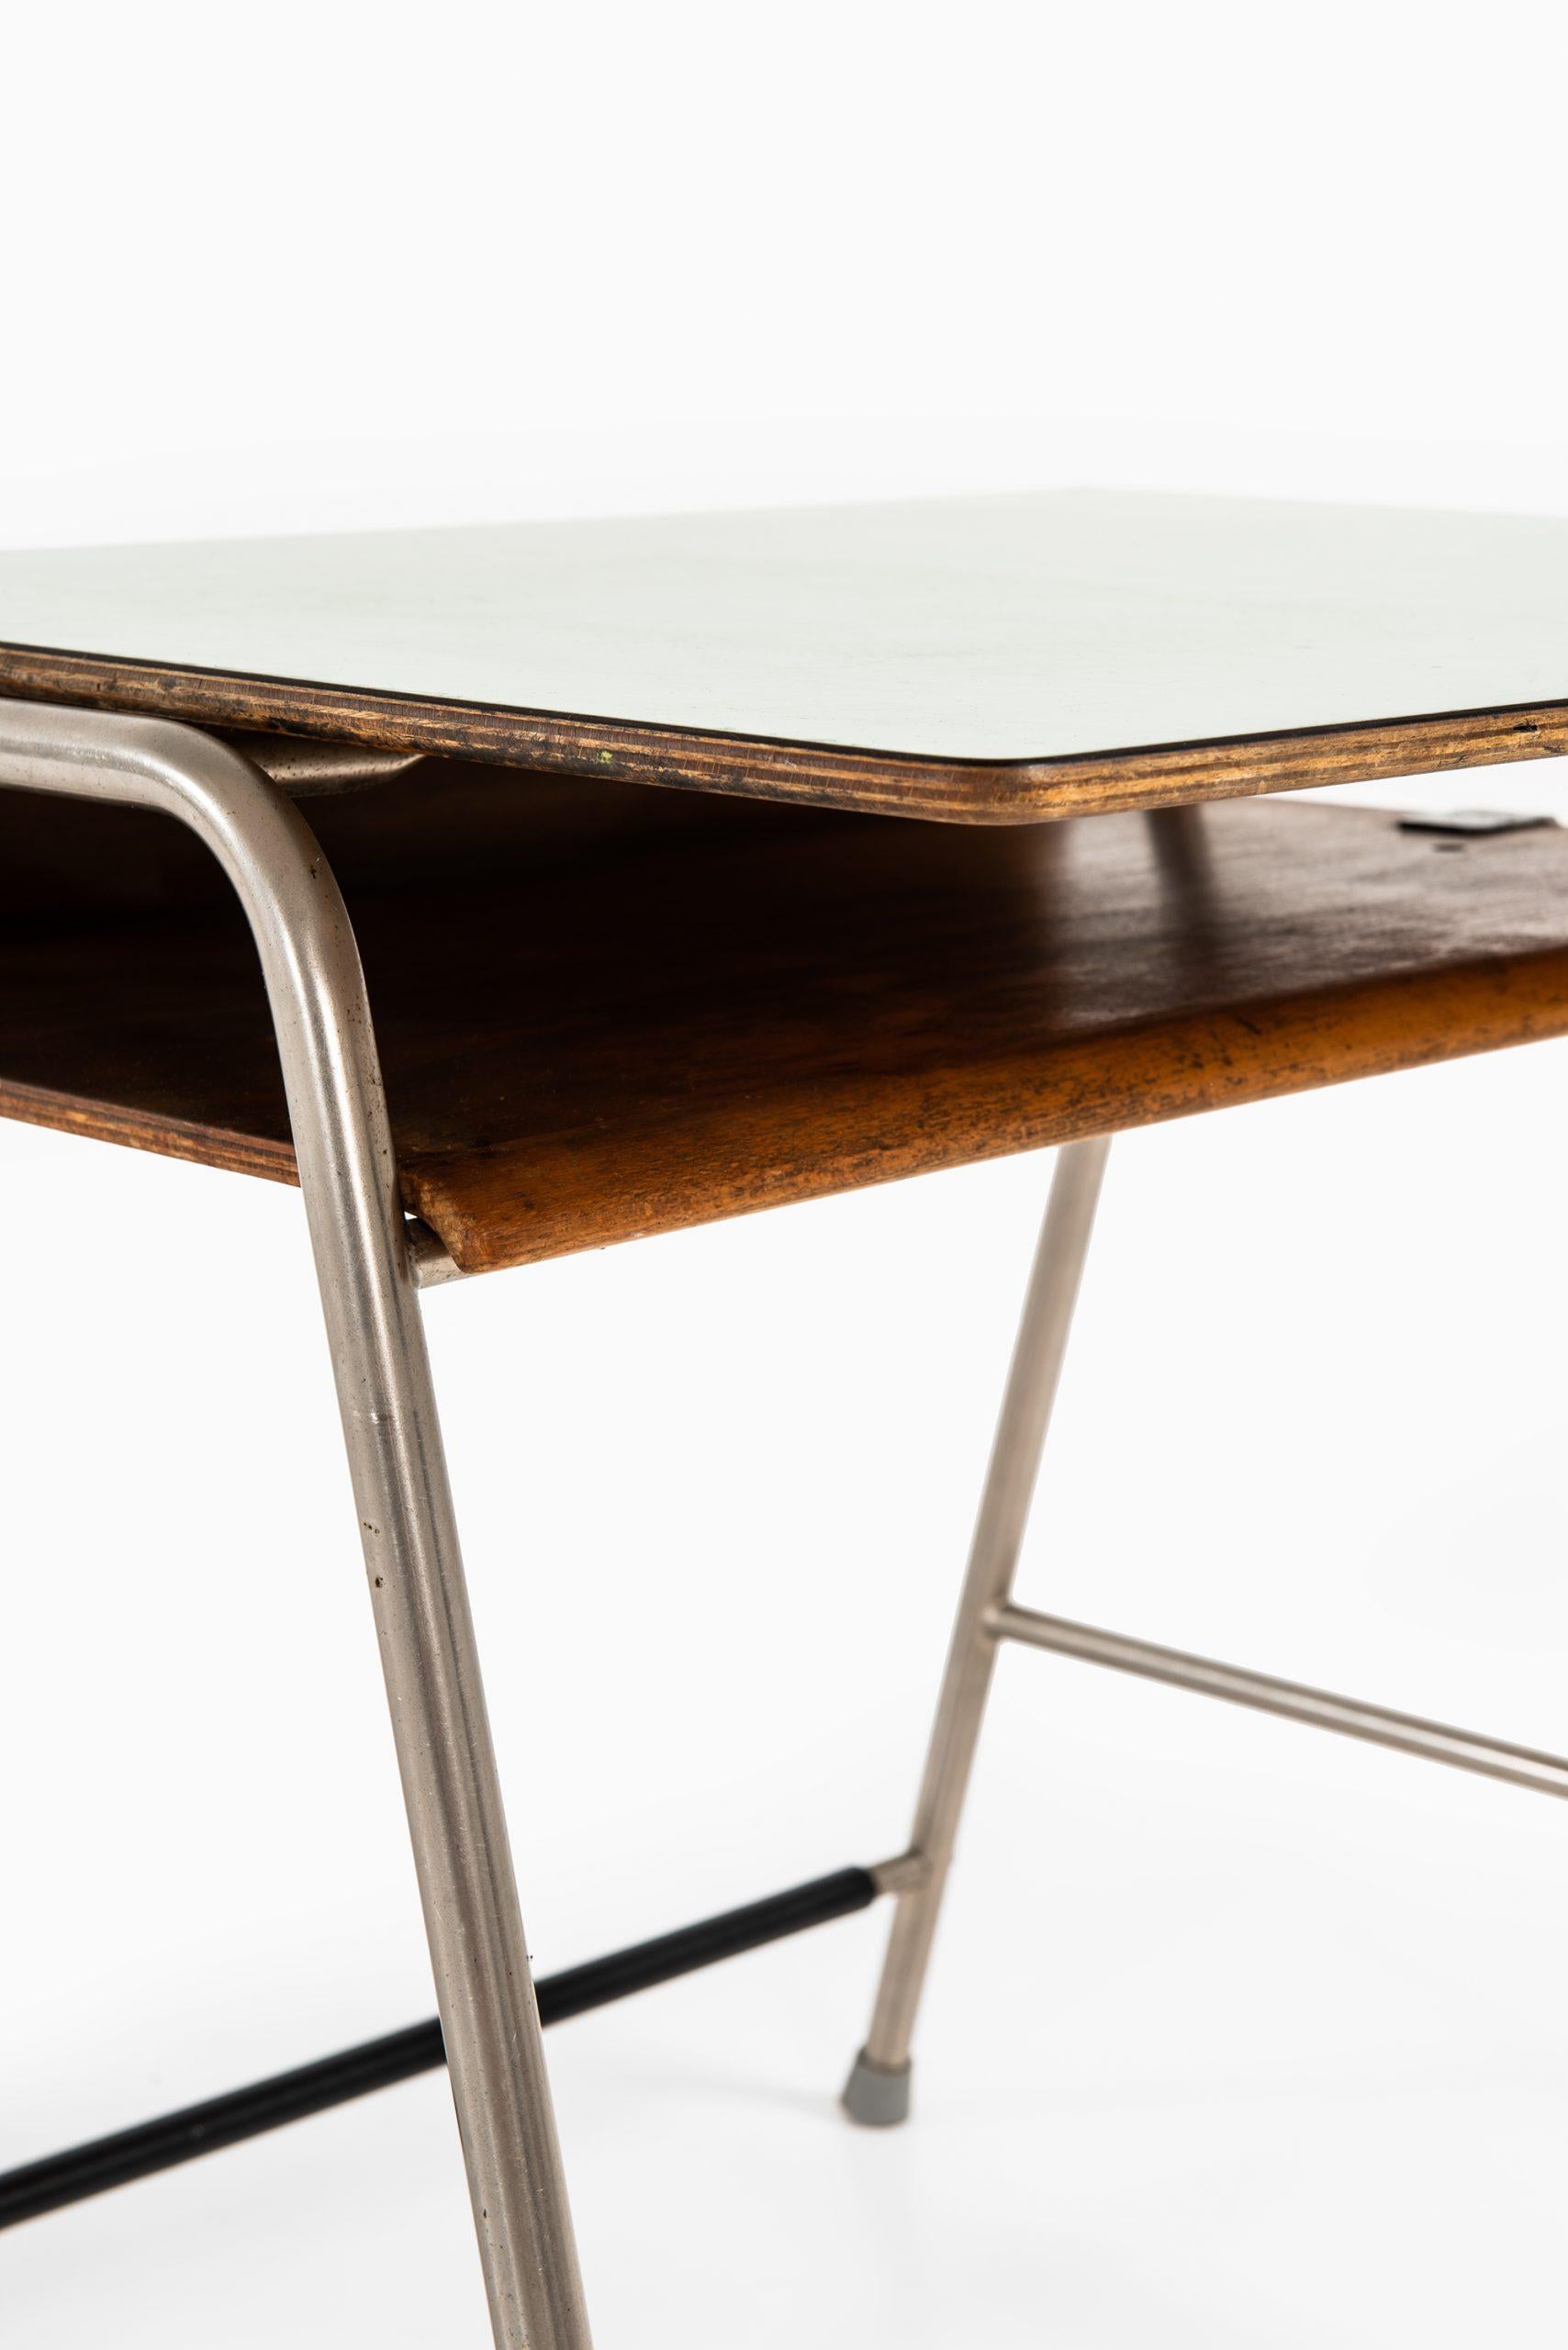 Scandinavian Modern Arne Jacobsen Munkegaard School Desk Produced by Fritz Hansen in Denmark For Sale